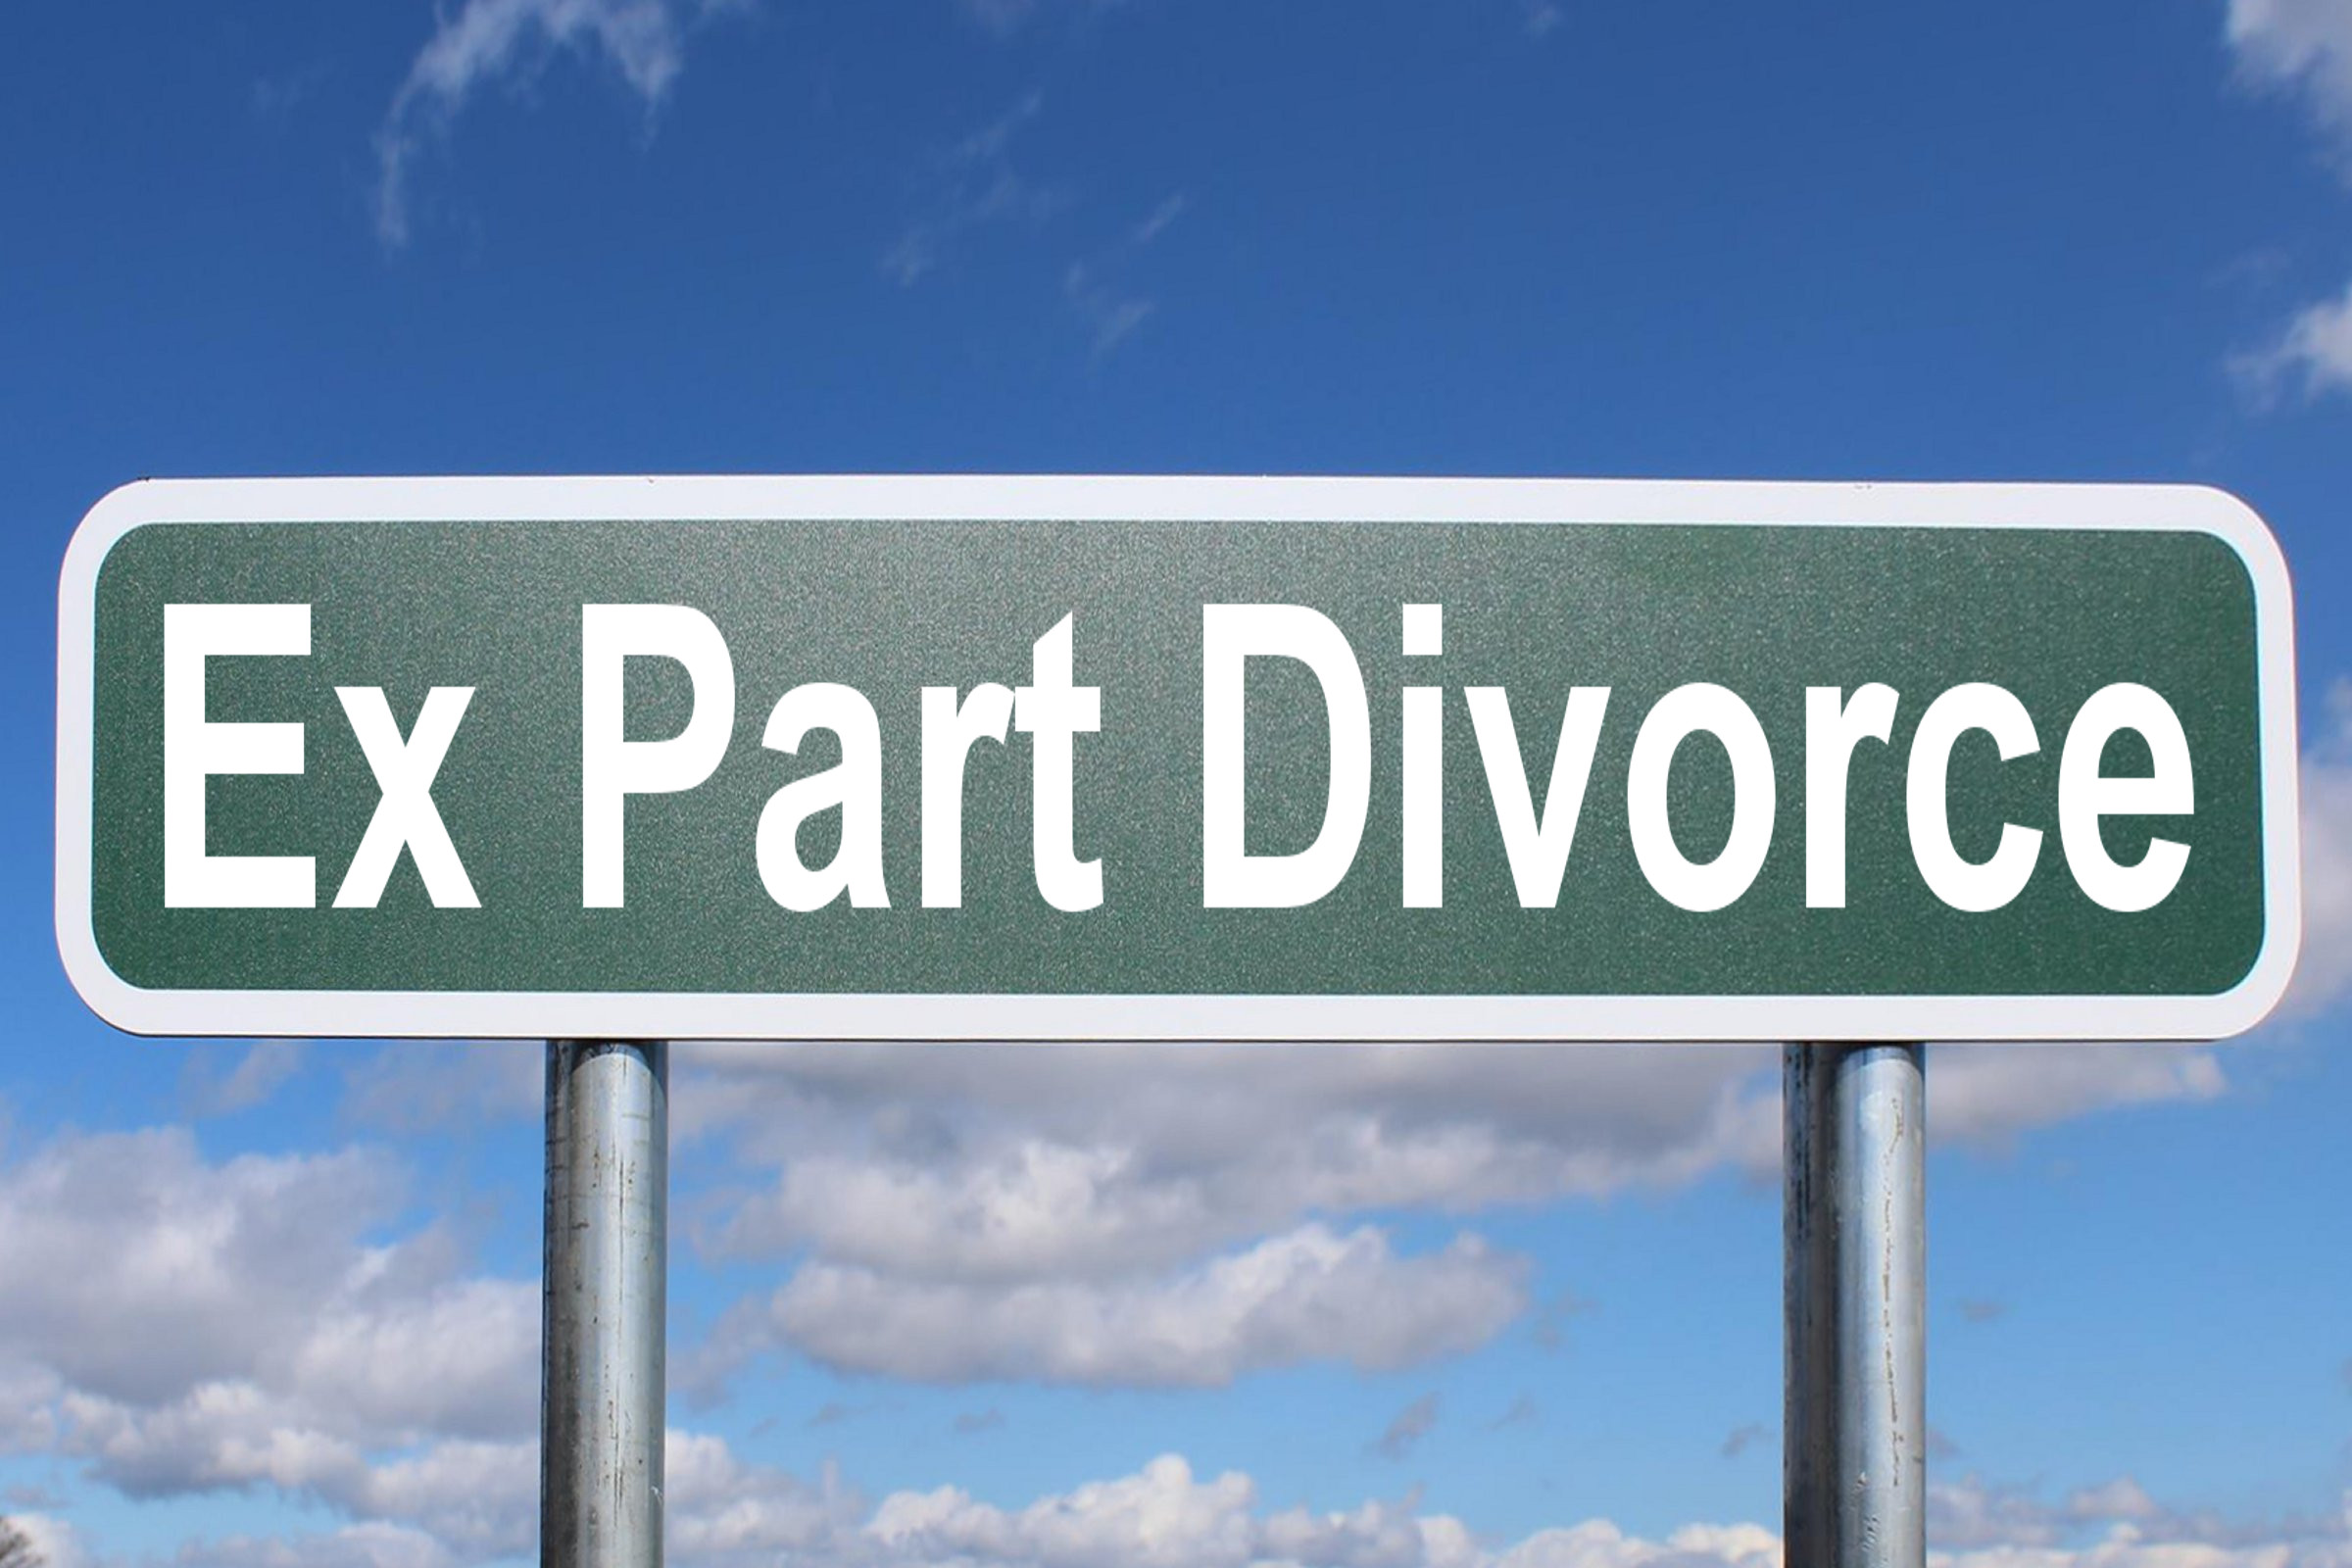 ex part divorce